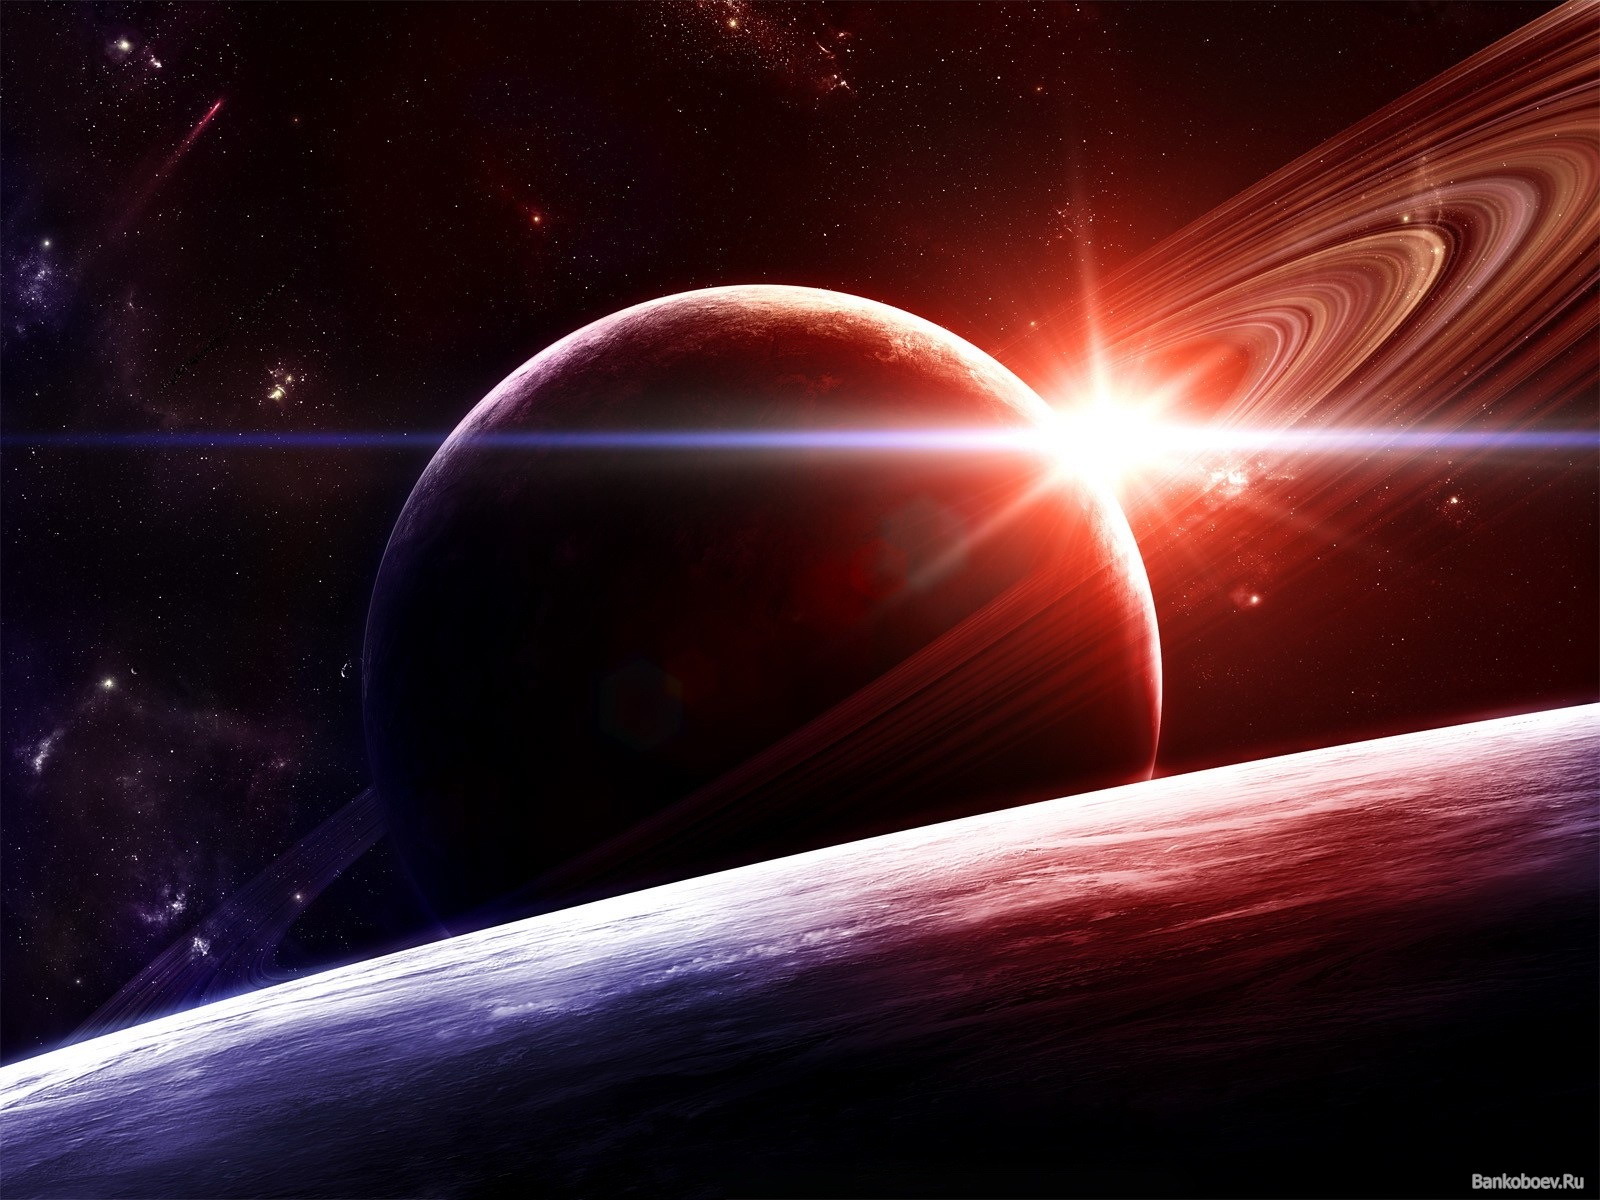 Fondos de Pantalla Planetas Anillo planetario Saturno Сosmos descargar  imagenes